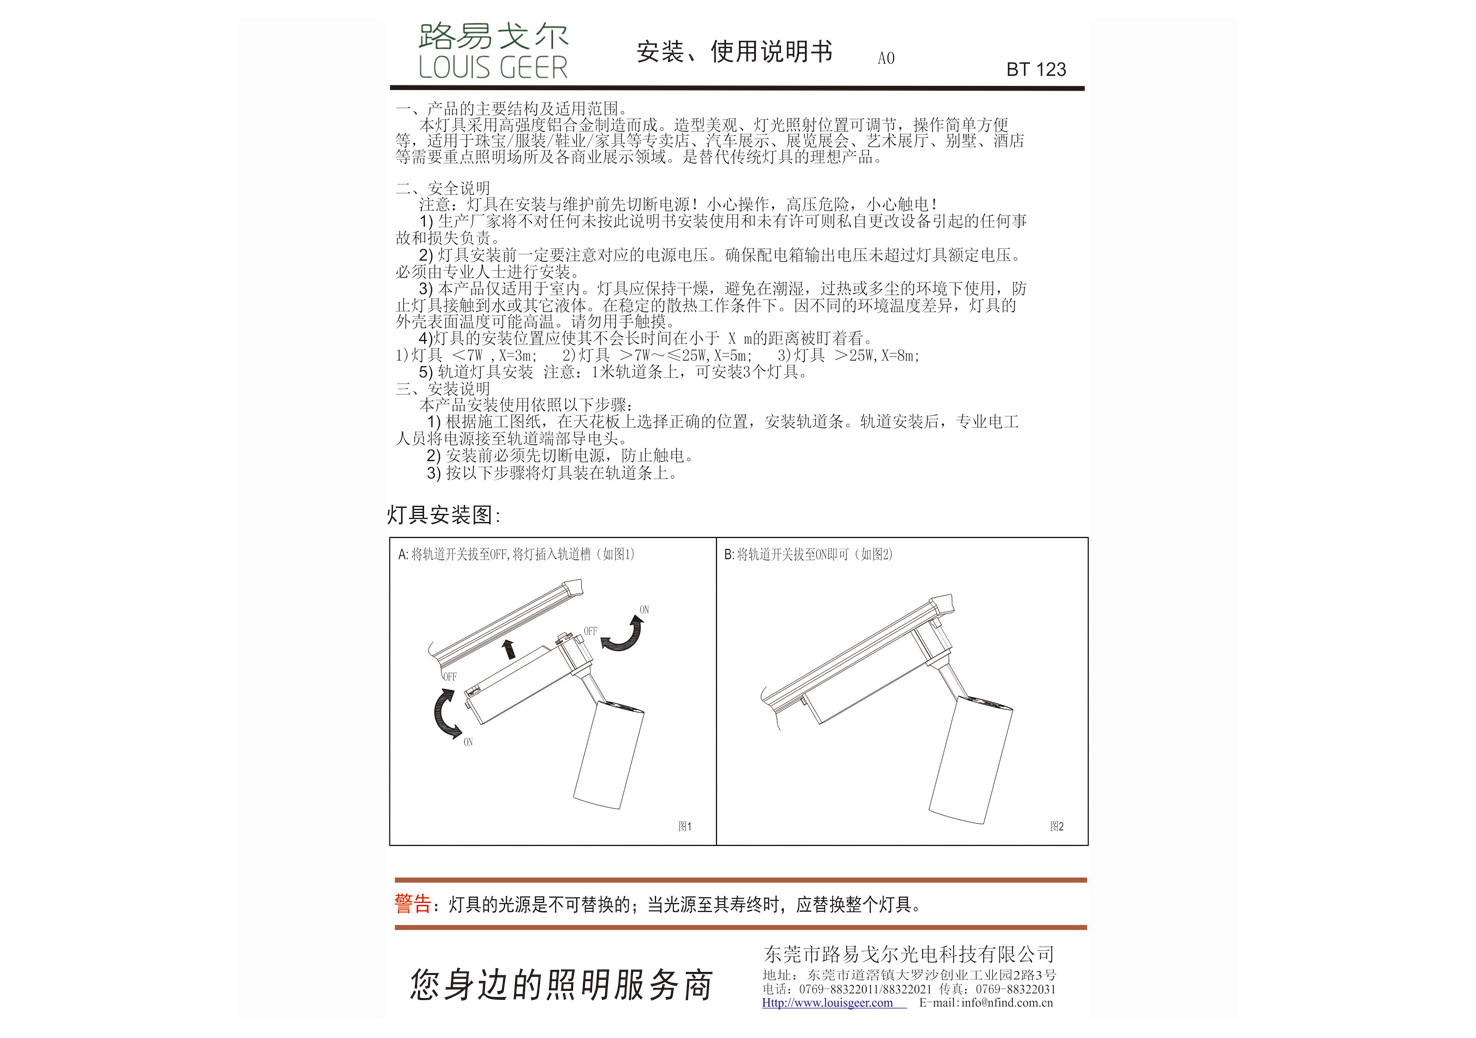 BT123 NF-SD-358B 509B 513B导轨灯电源盒款通用安装说明书-中文.jpg